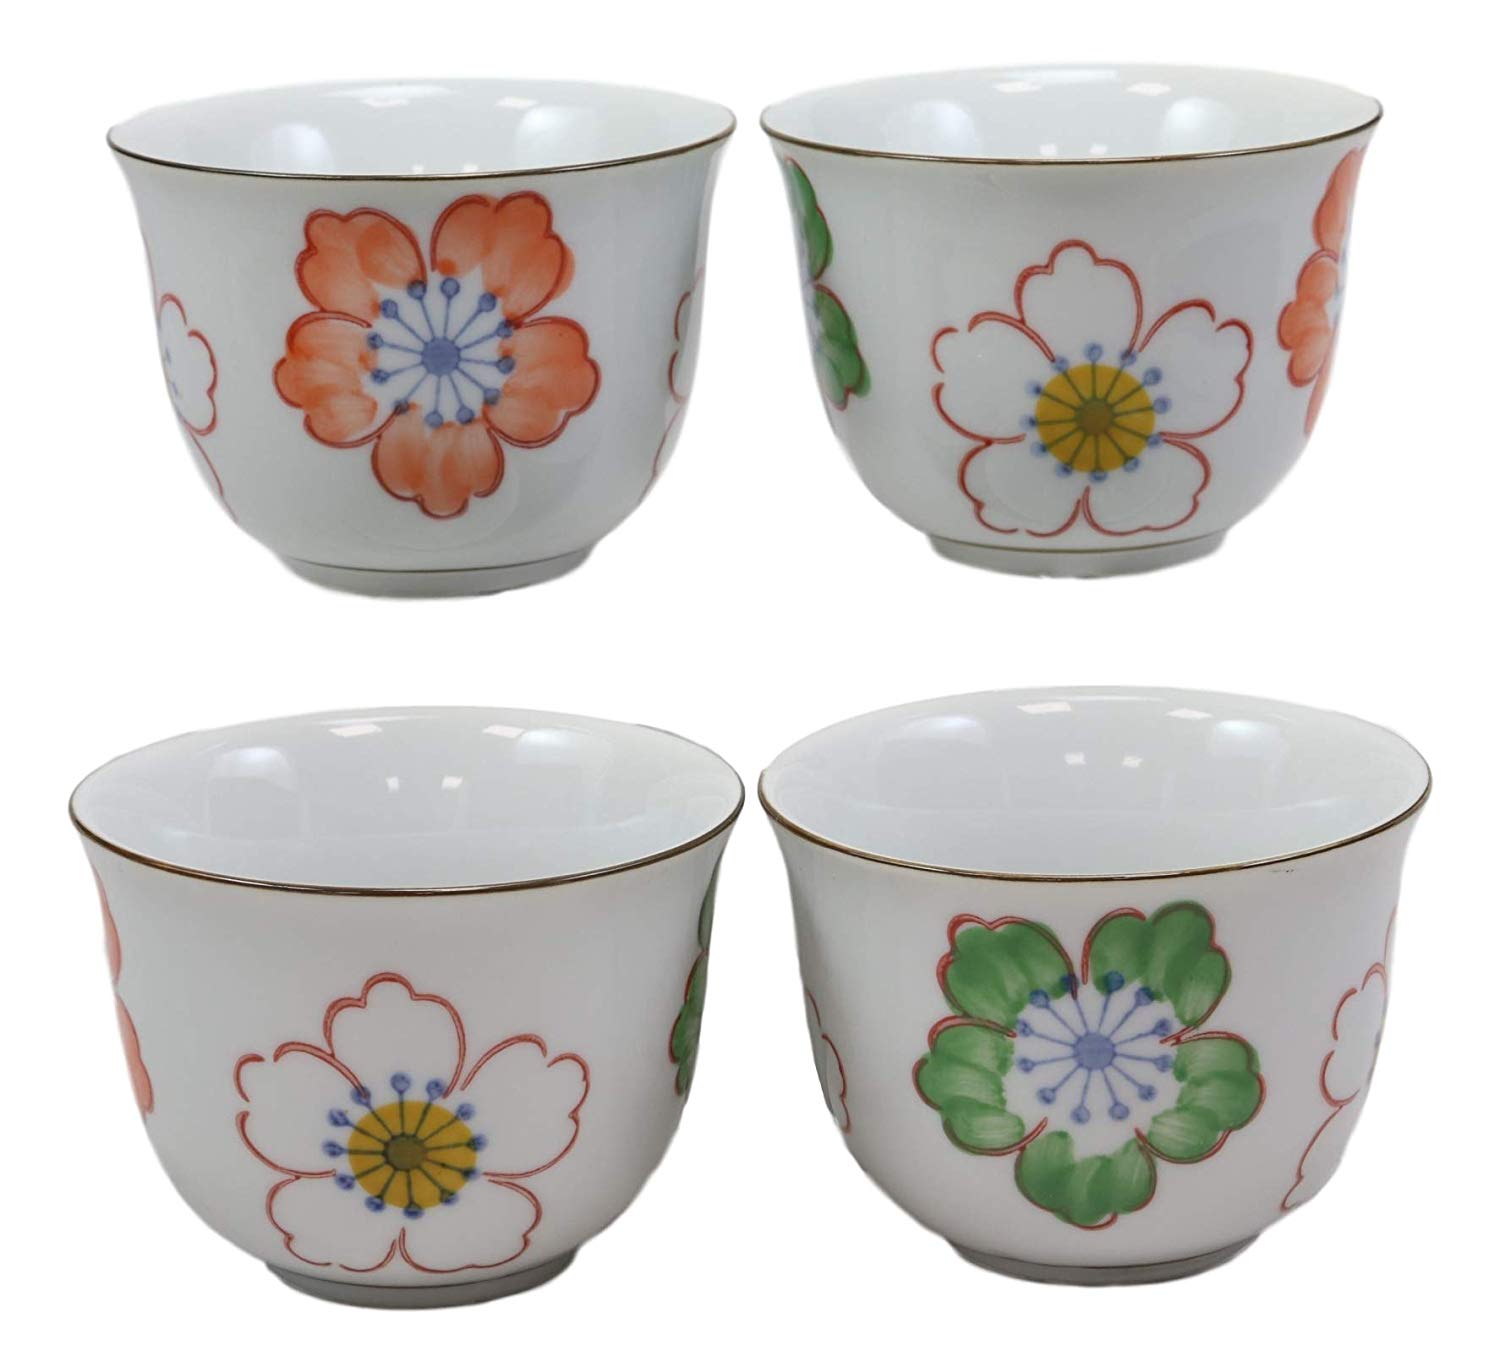 Japanese Design Colorful Botanic Floral Porcelain White Tea Pot And Cups Set - image 4 of 8